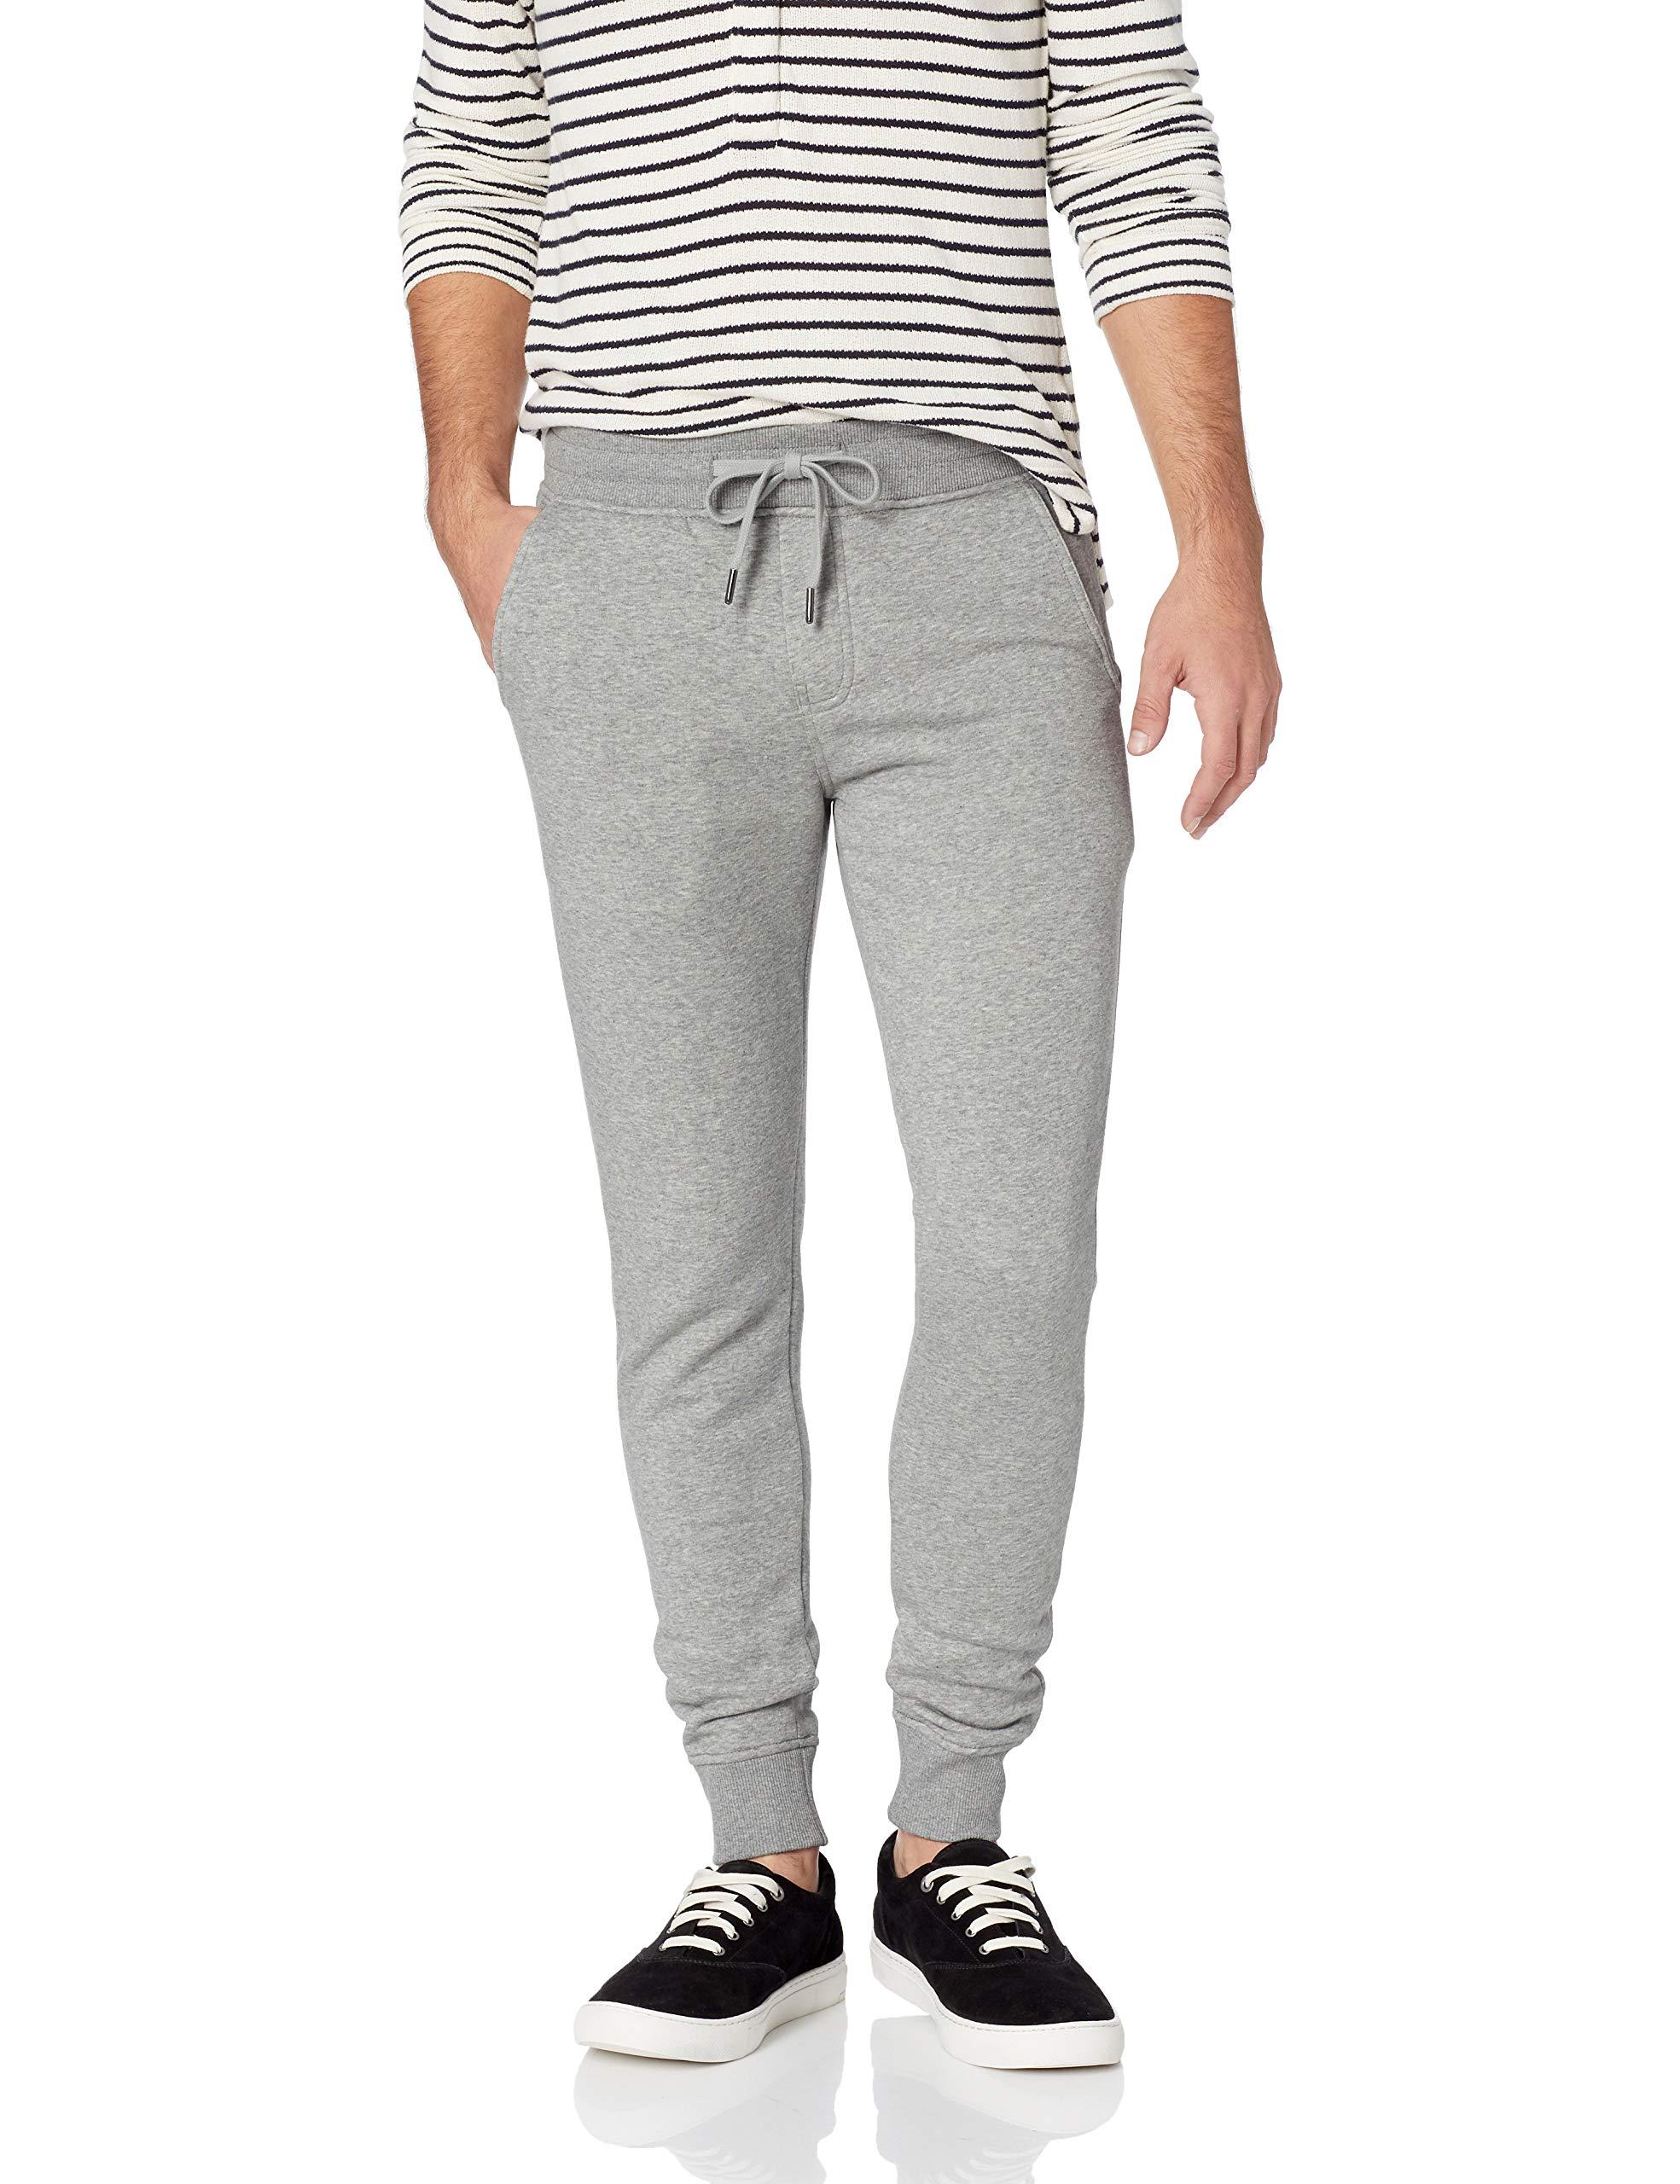 Calvin Klein Denim Institutional Logo Sweatpants in Gray for Men - Save ...